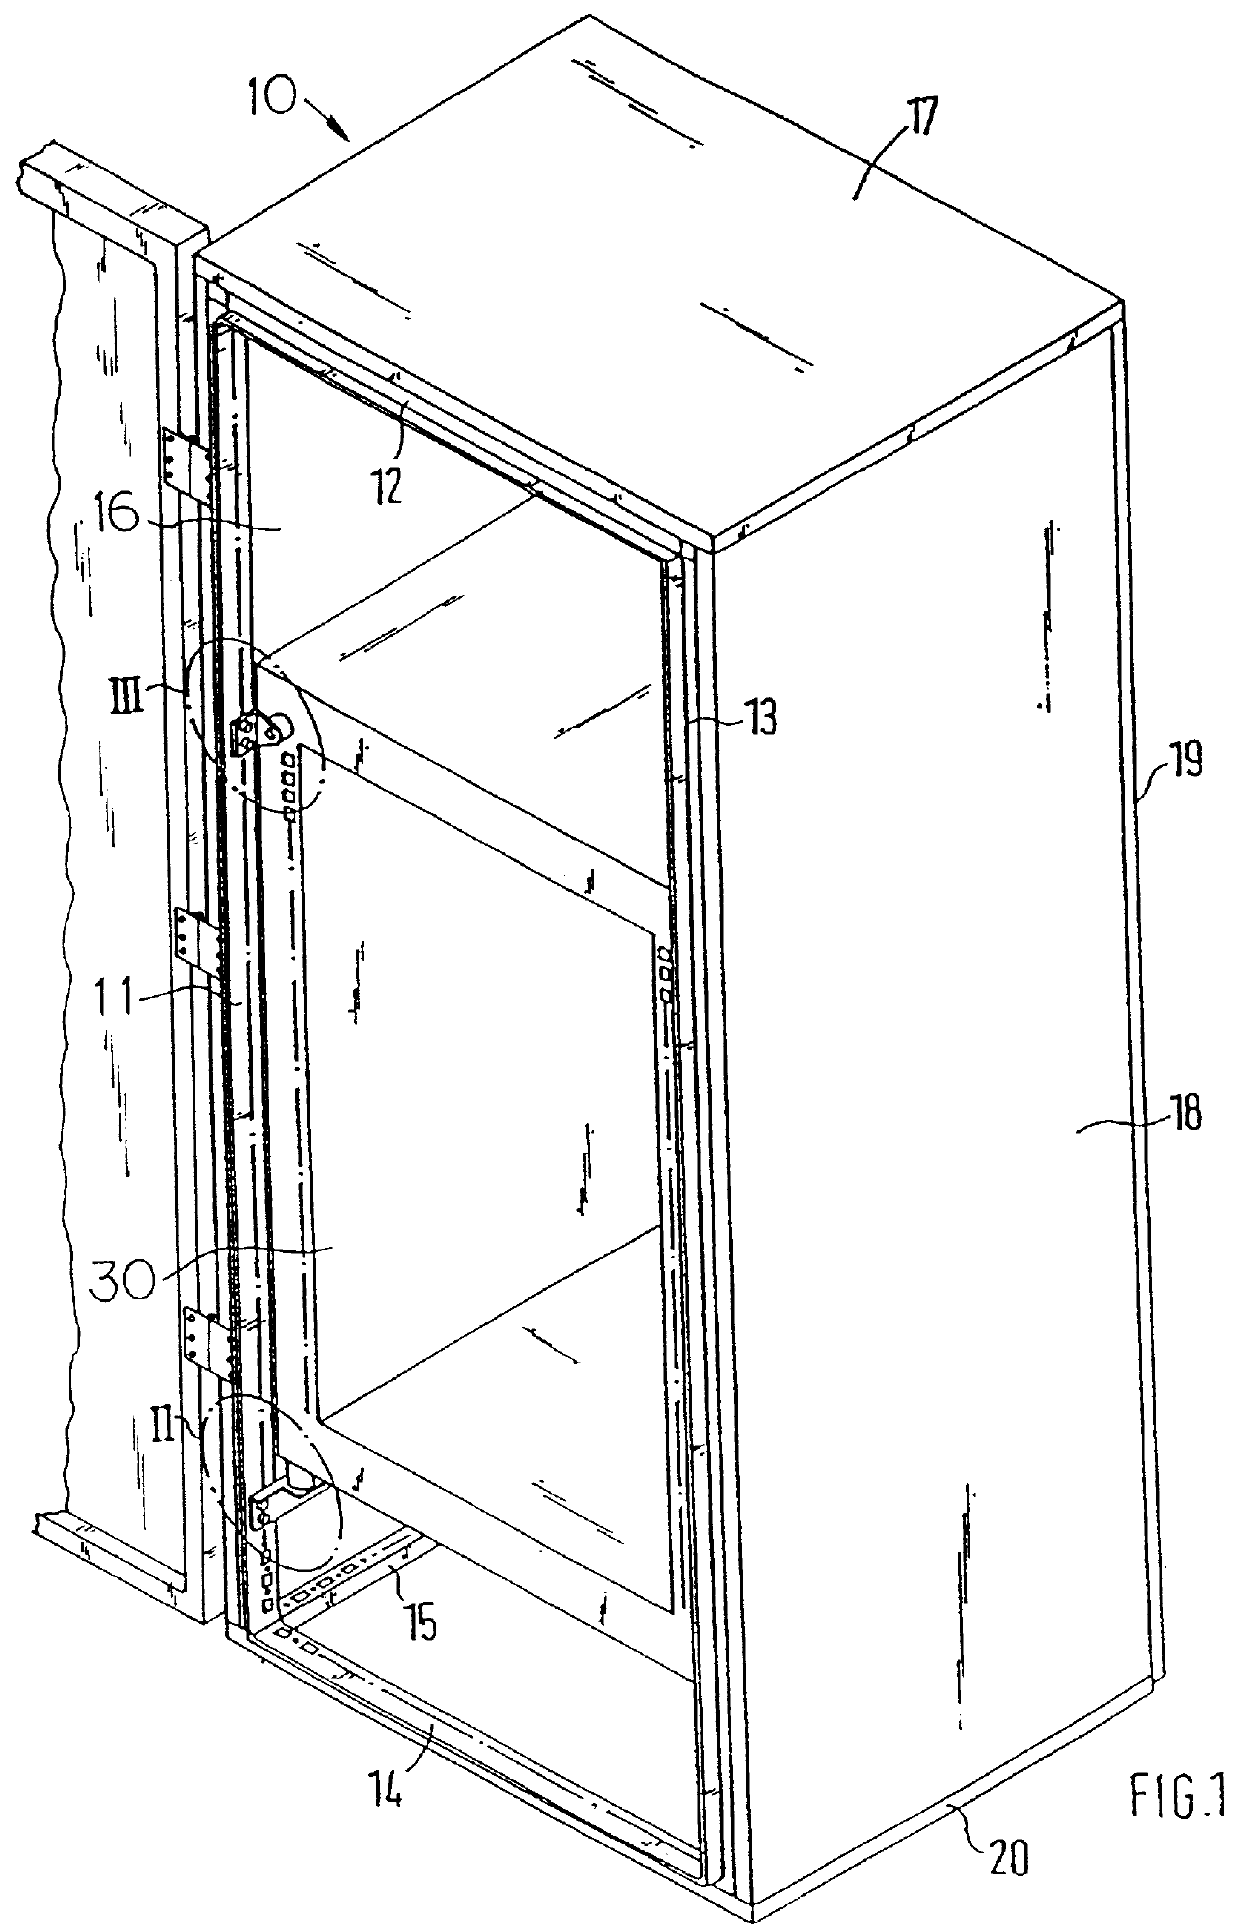 Switchgear cabinet with a framework